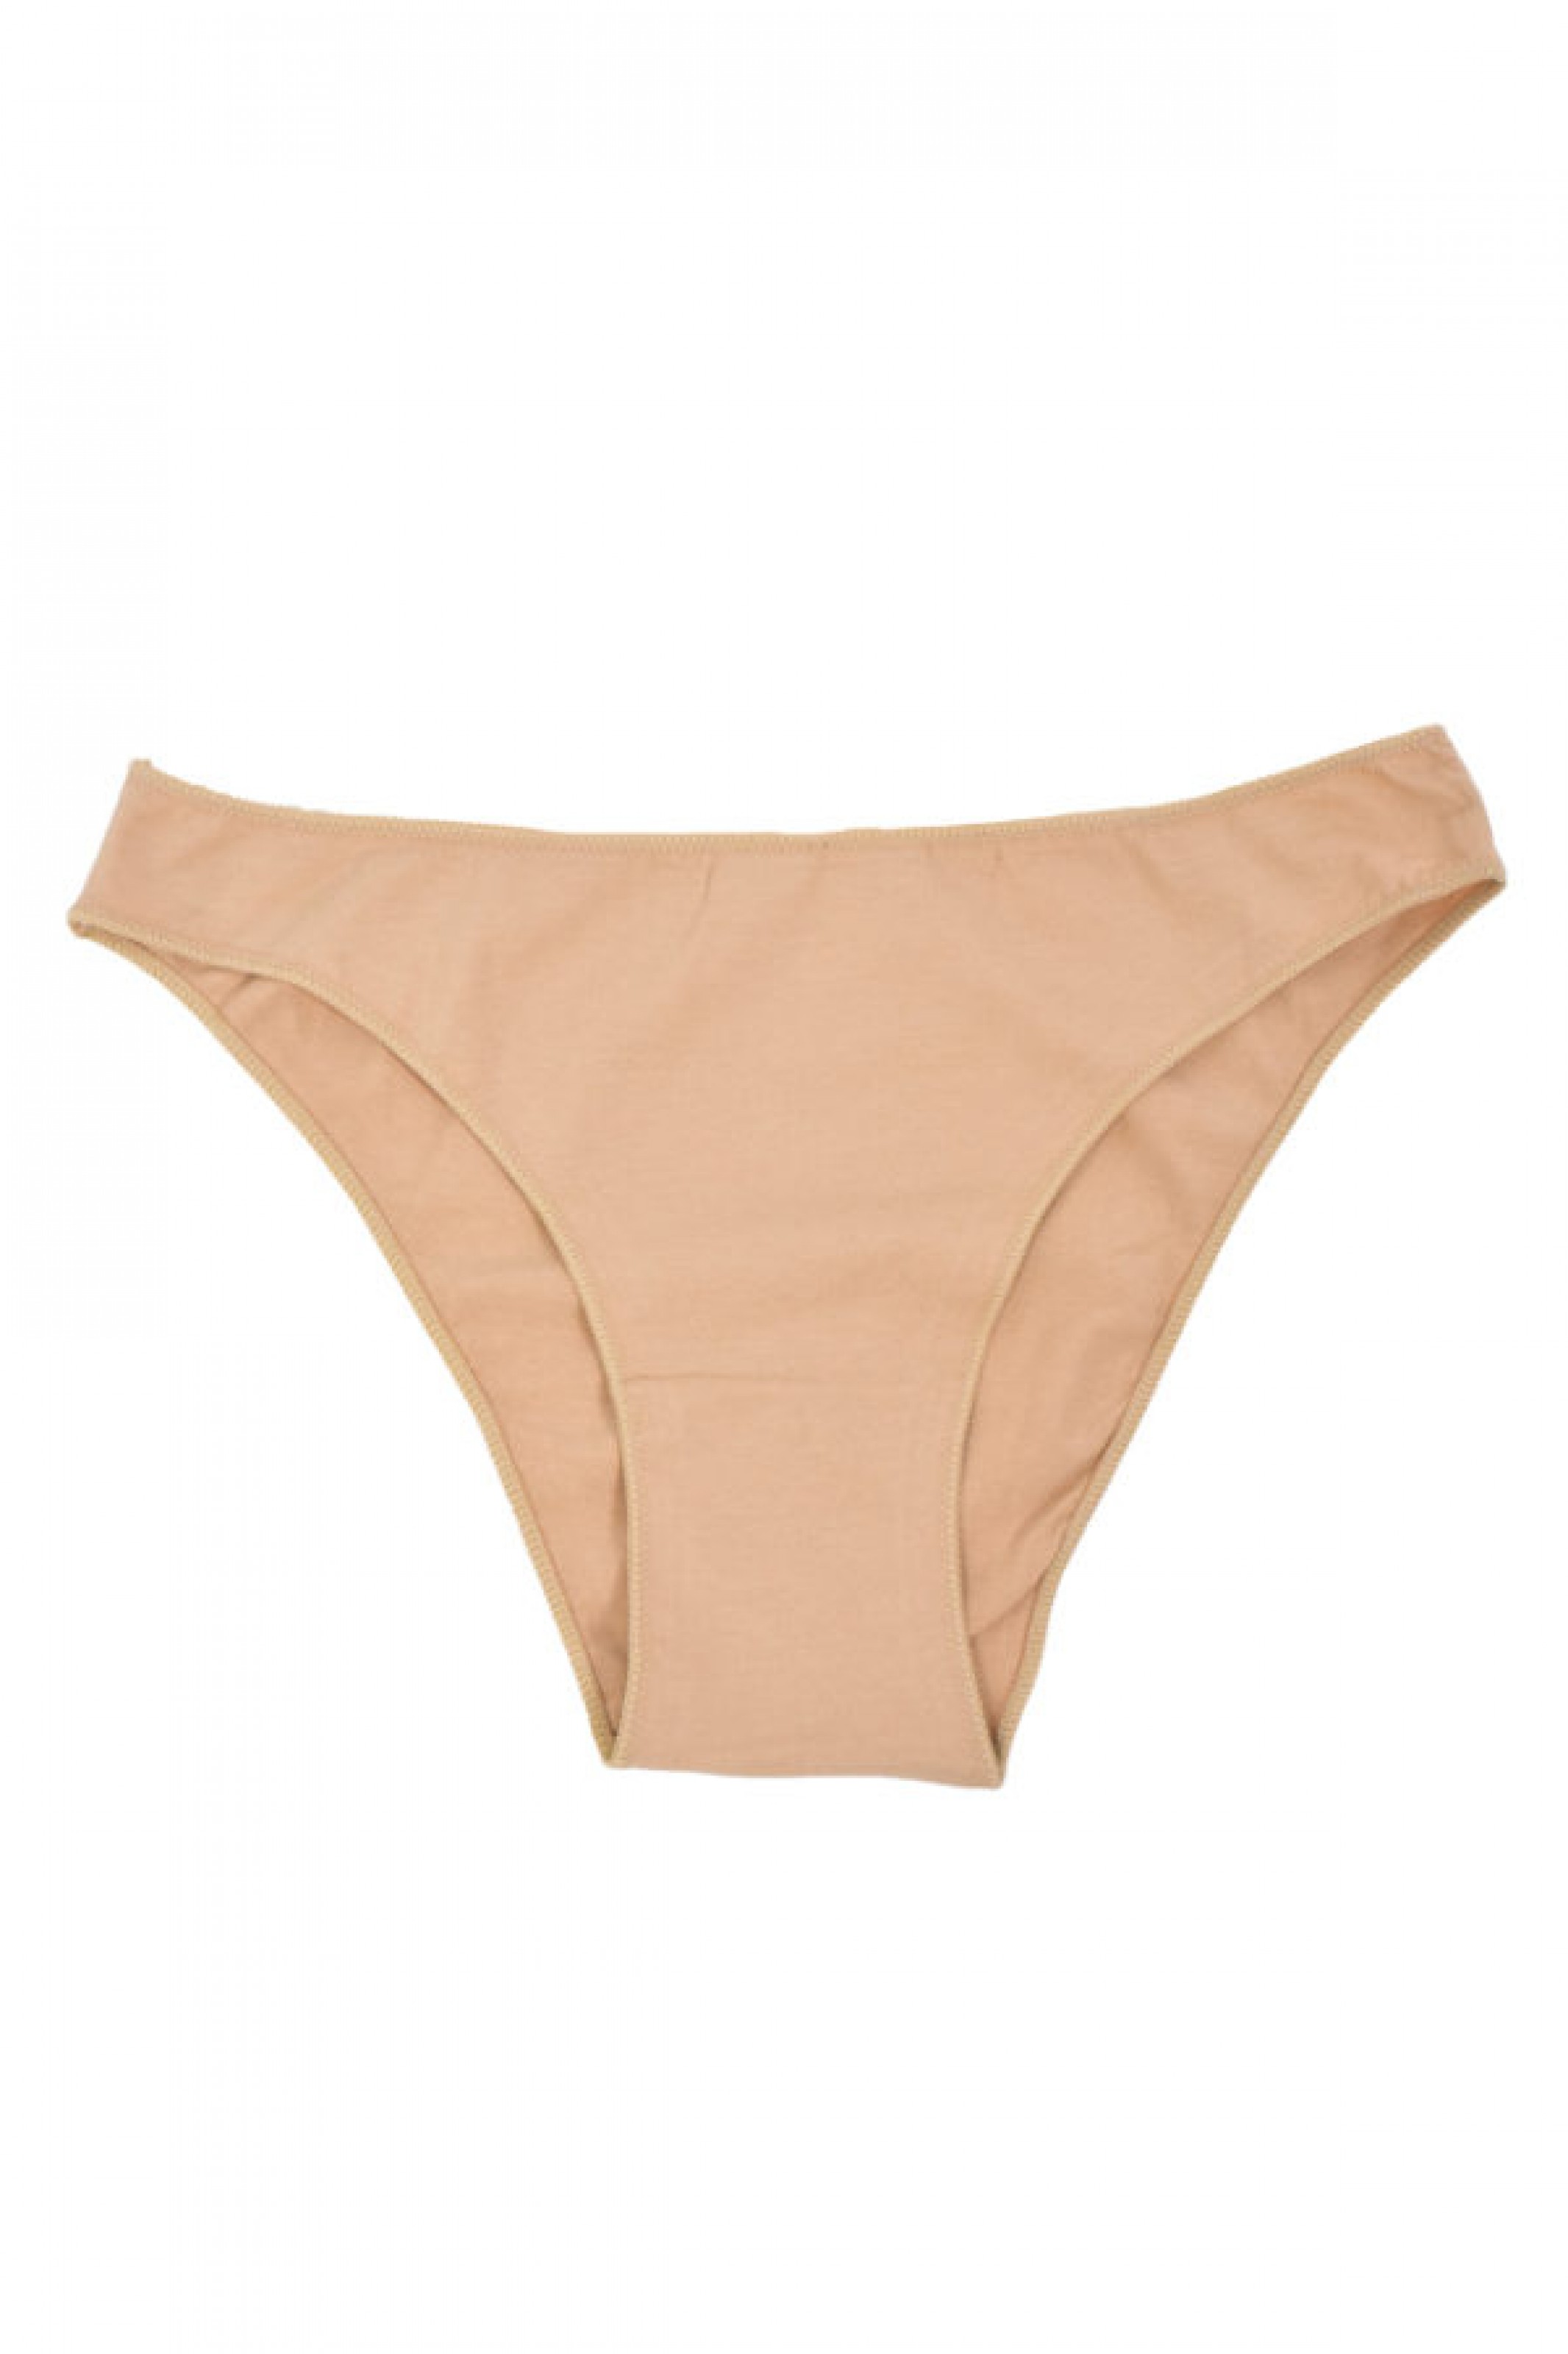 INVISI Cotton panties Monochrome (6 Pack) - MoutakisWorld.com